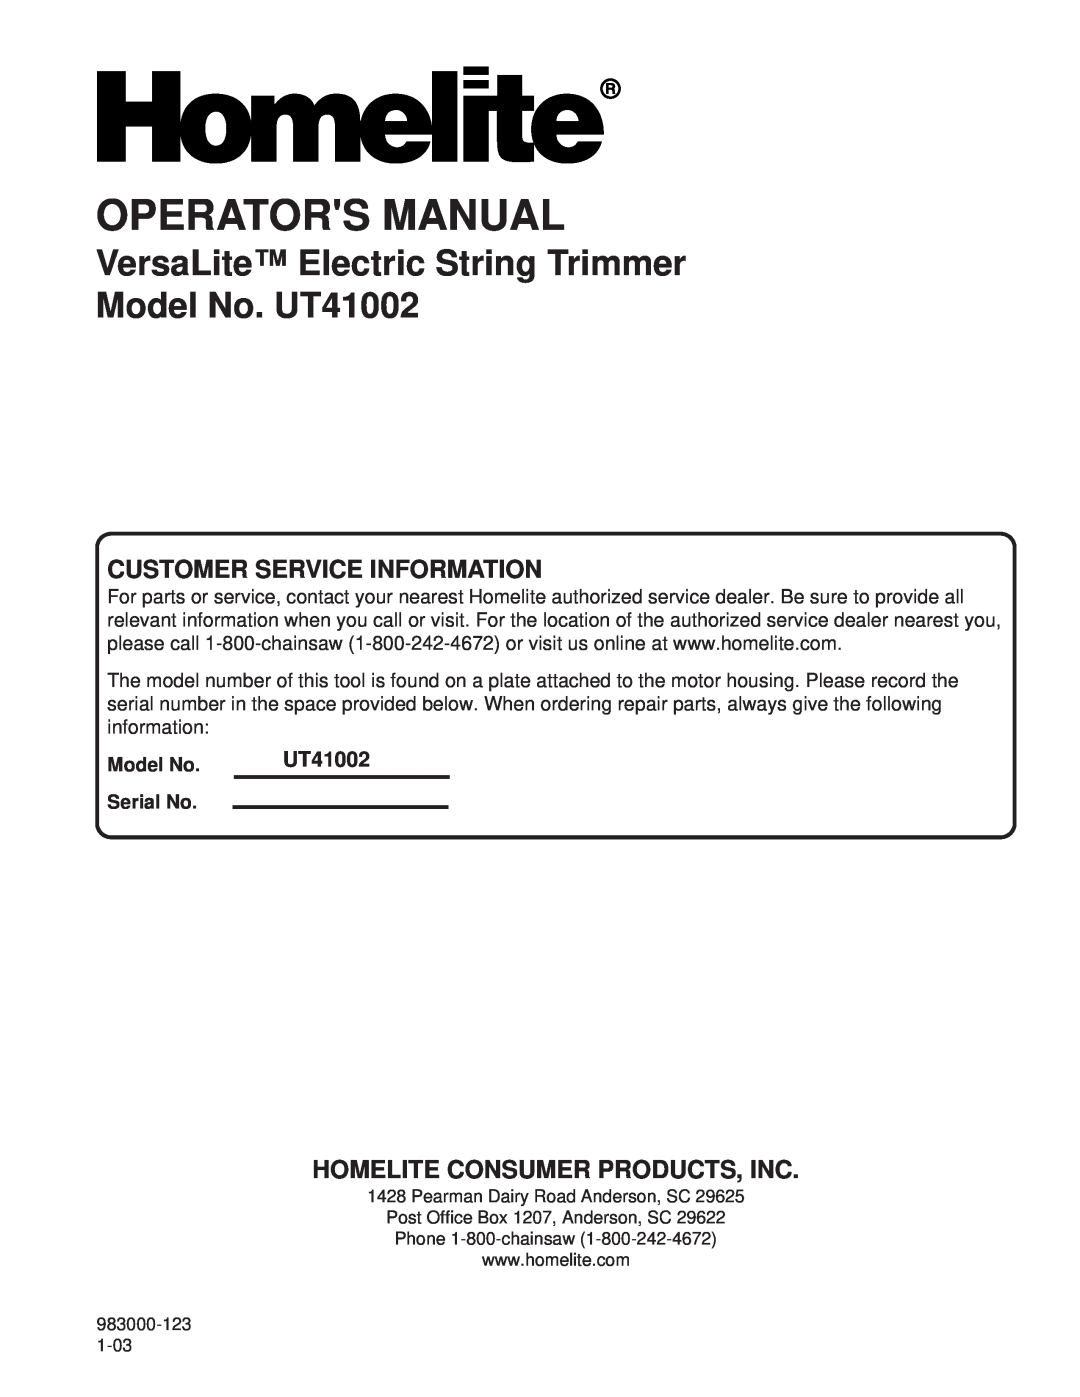 Homelite UT41002 Customer Service Information, Homelite Consumer Products, Inc, Model No, Serial No, Operators Manual 